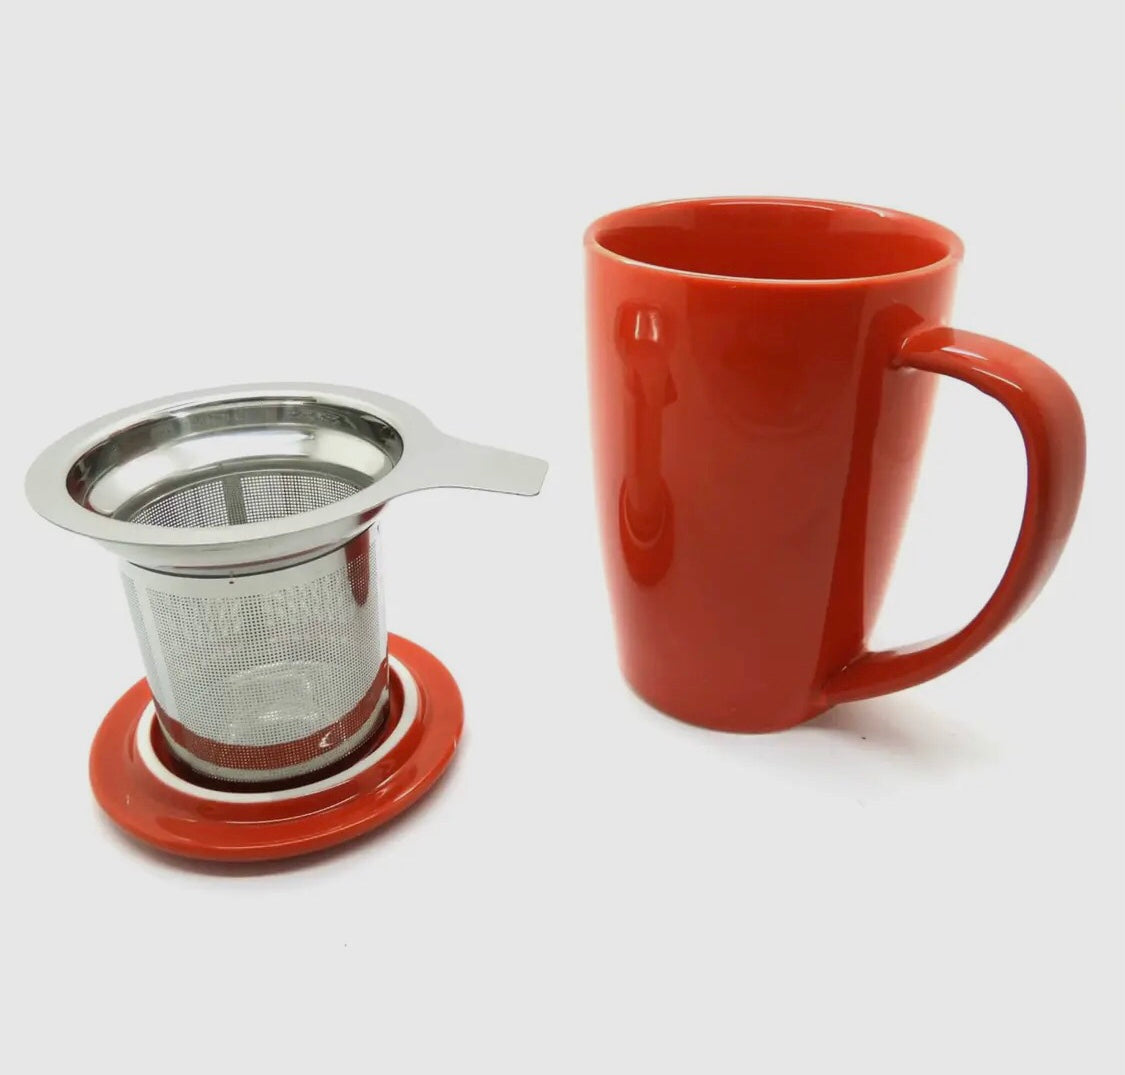 The Lil Steep - 13.5 oz Ceramic Mug with Infuser